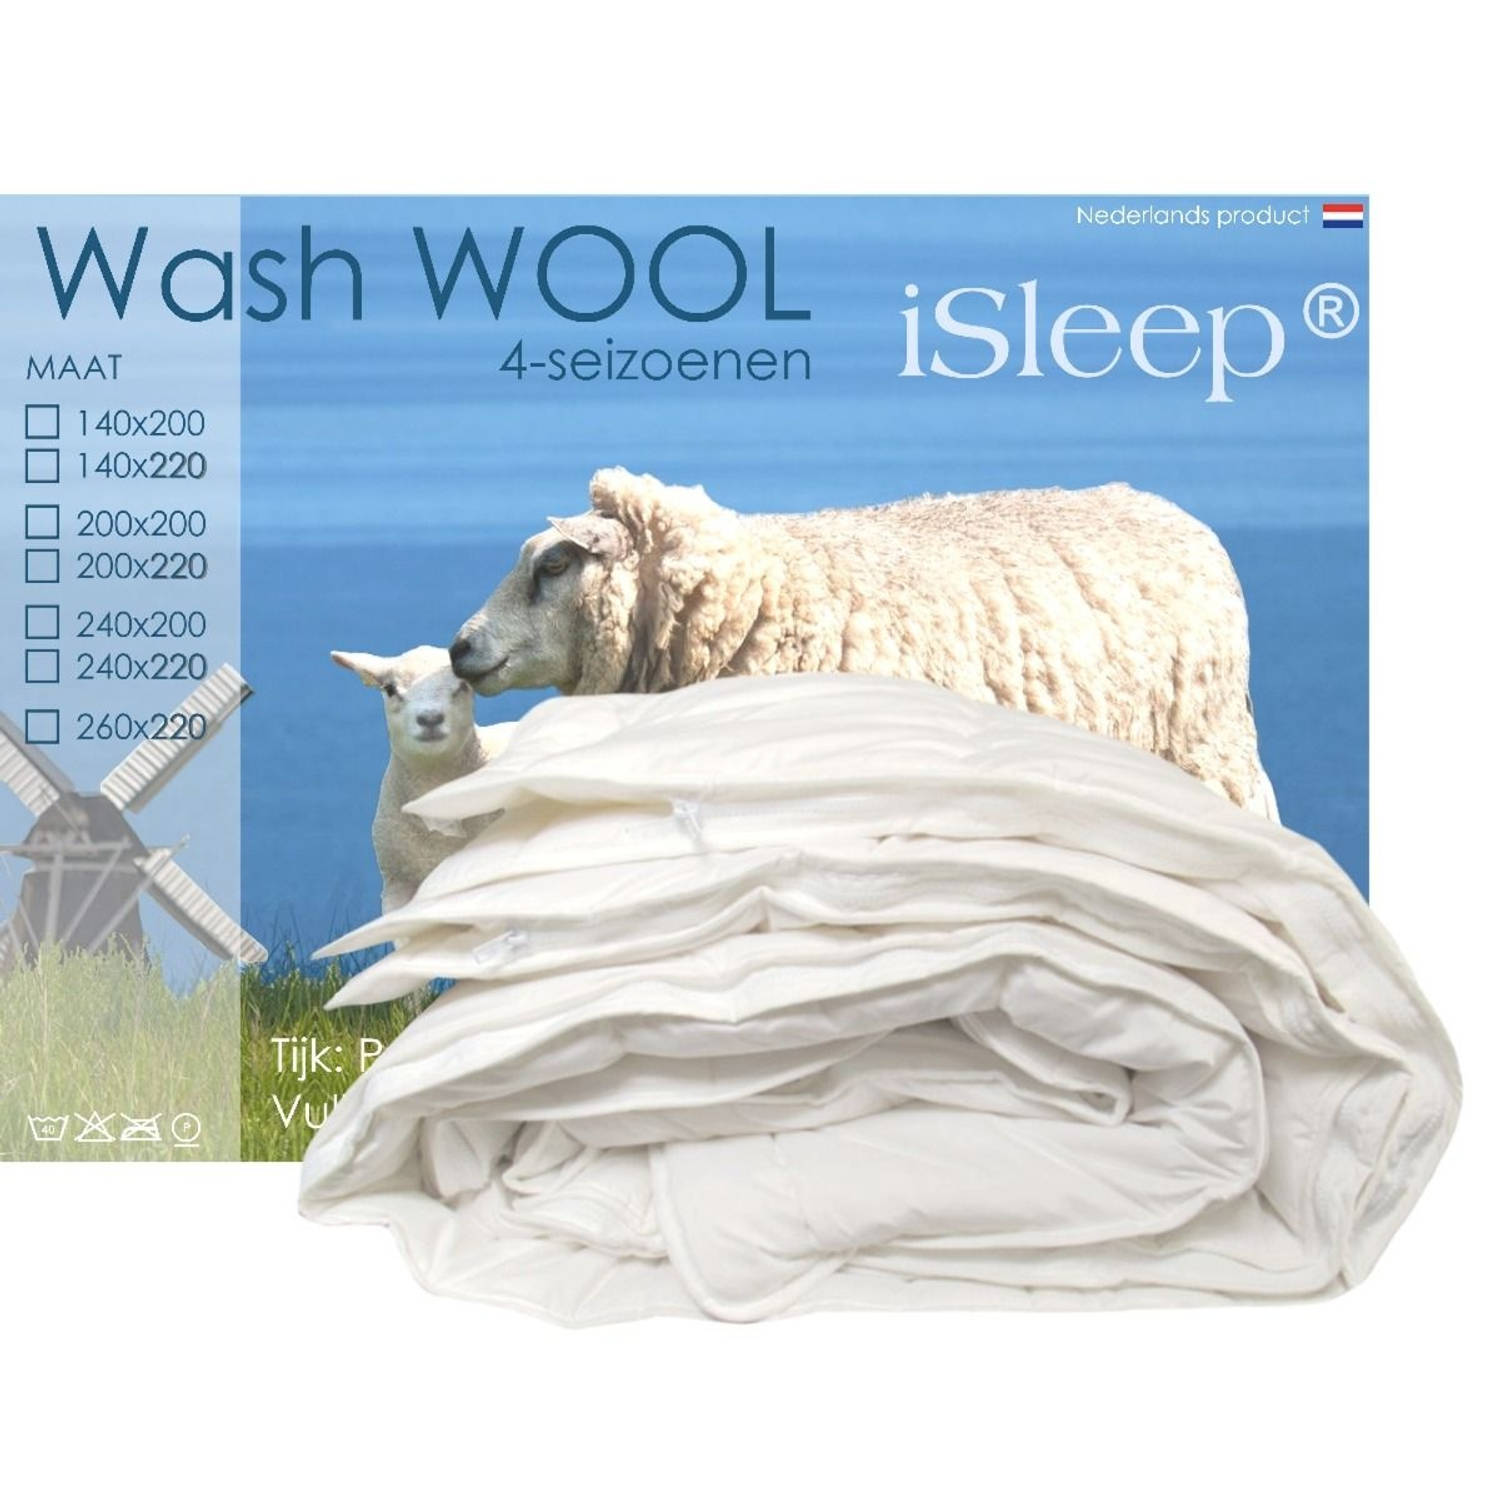 iSleep Wash Wool wollen 4-seizoenen dekbed wasbare wol Lits-jumeaux XL 260x220 cm